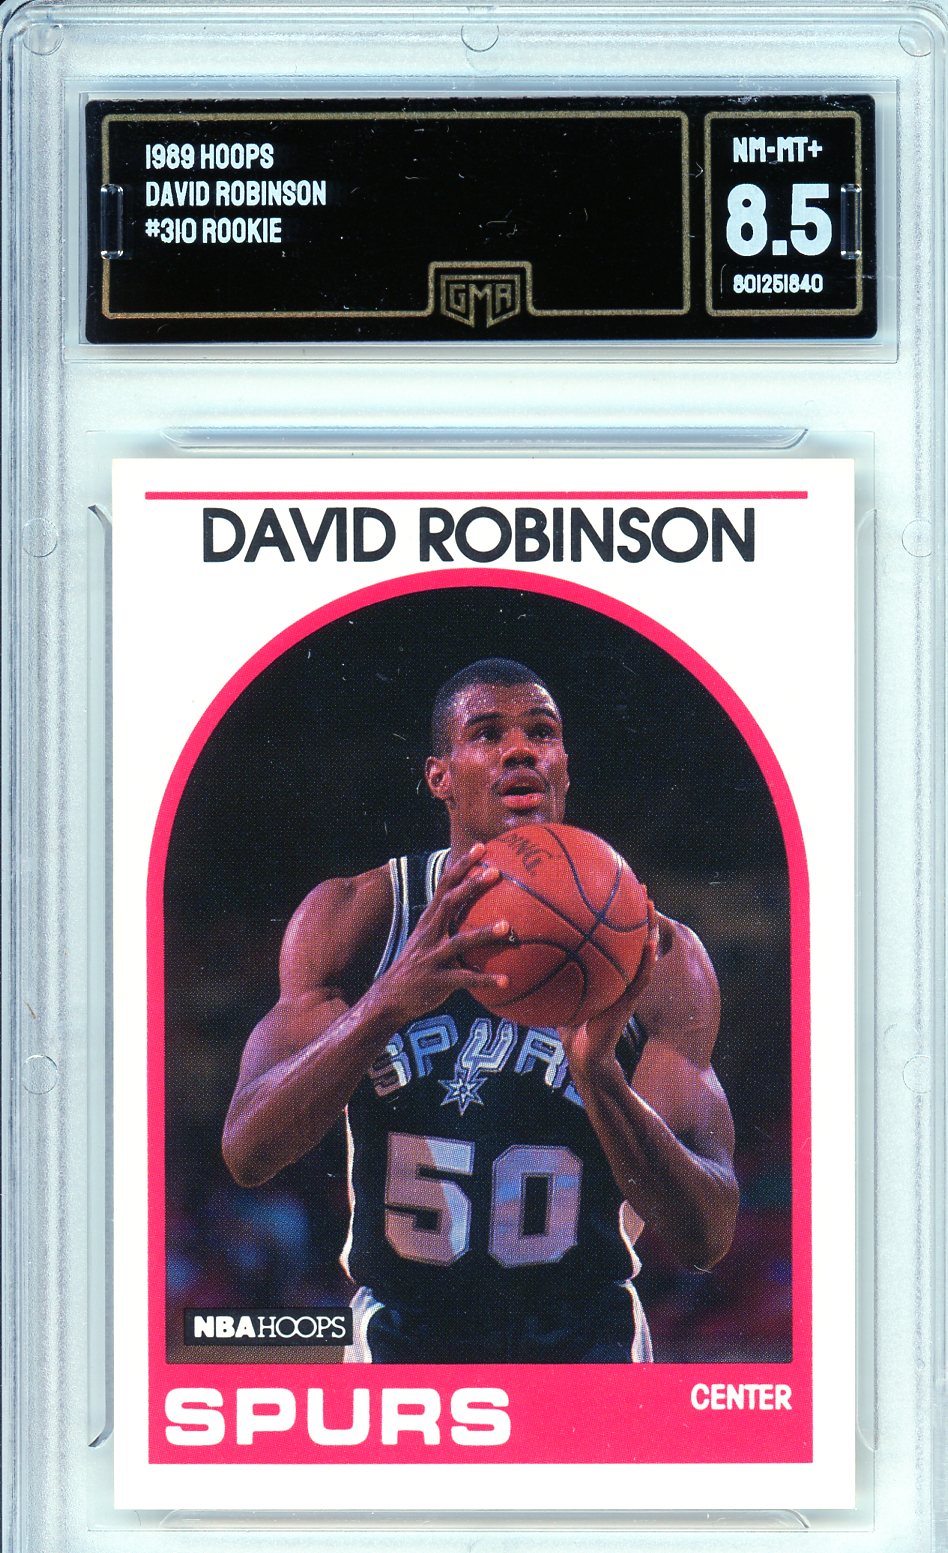 1989 Hoops David Robinson #310 Rookie Card GMA 8.5